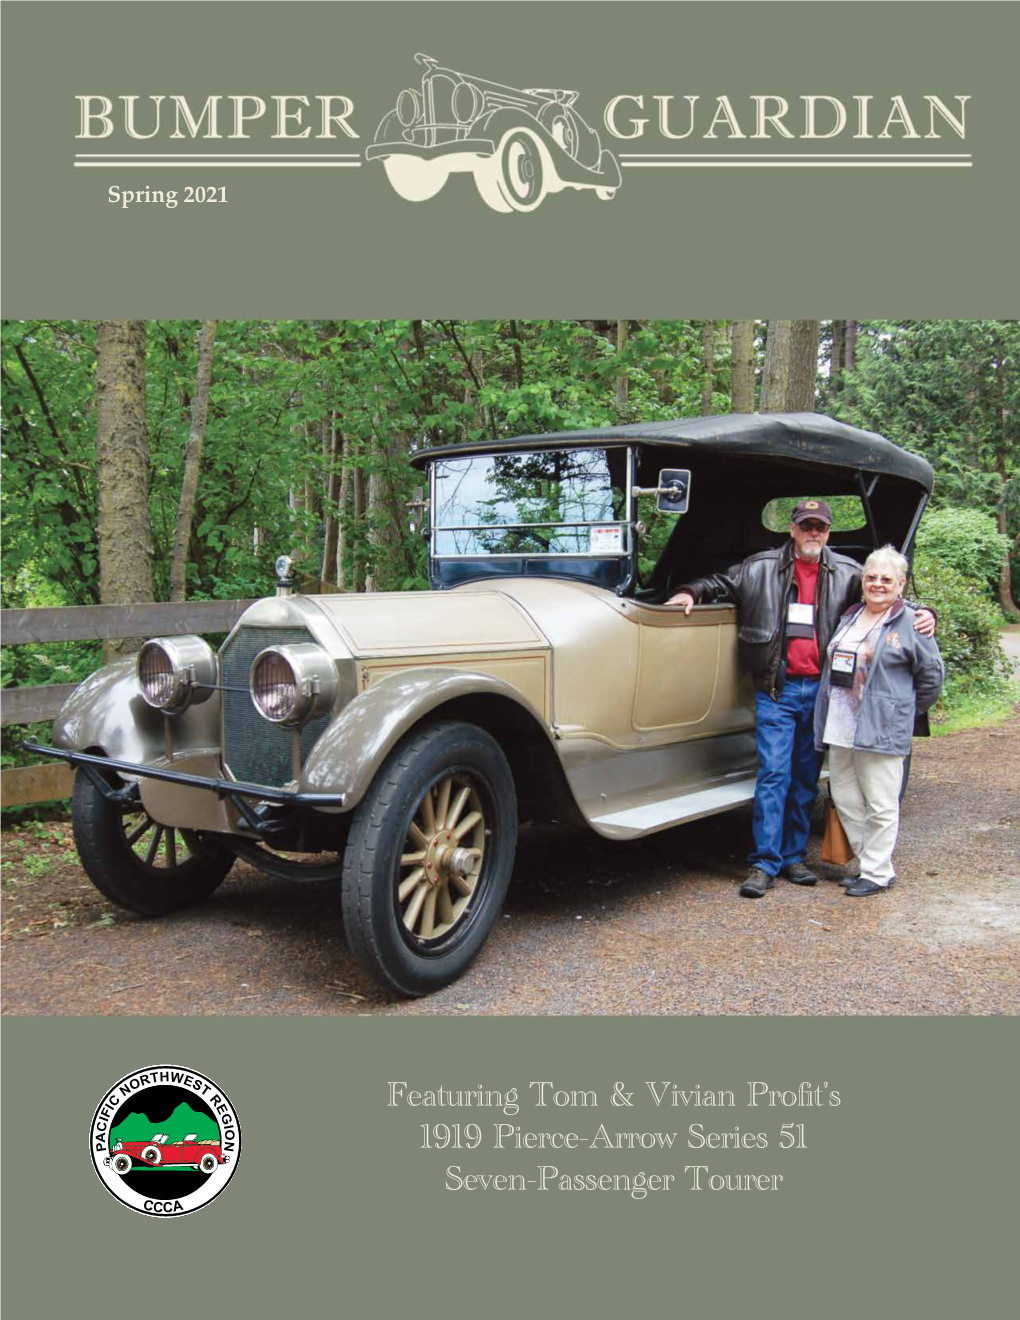 Featuring Tom & Vivian Profit's 1919 Pierce-Arrow Series 51 Seven-Passenger Tourer